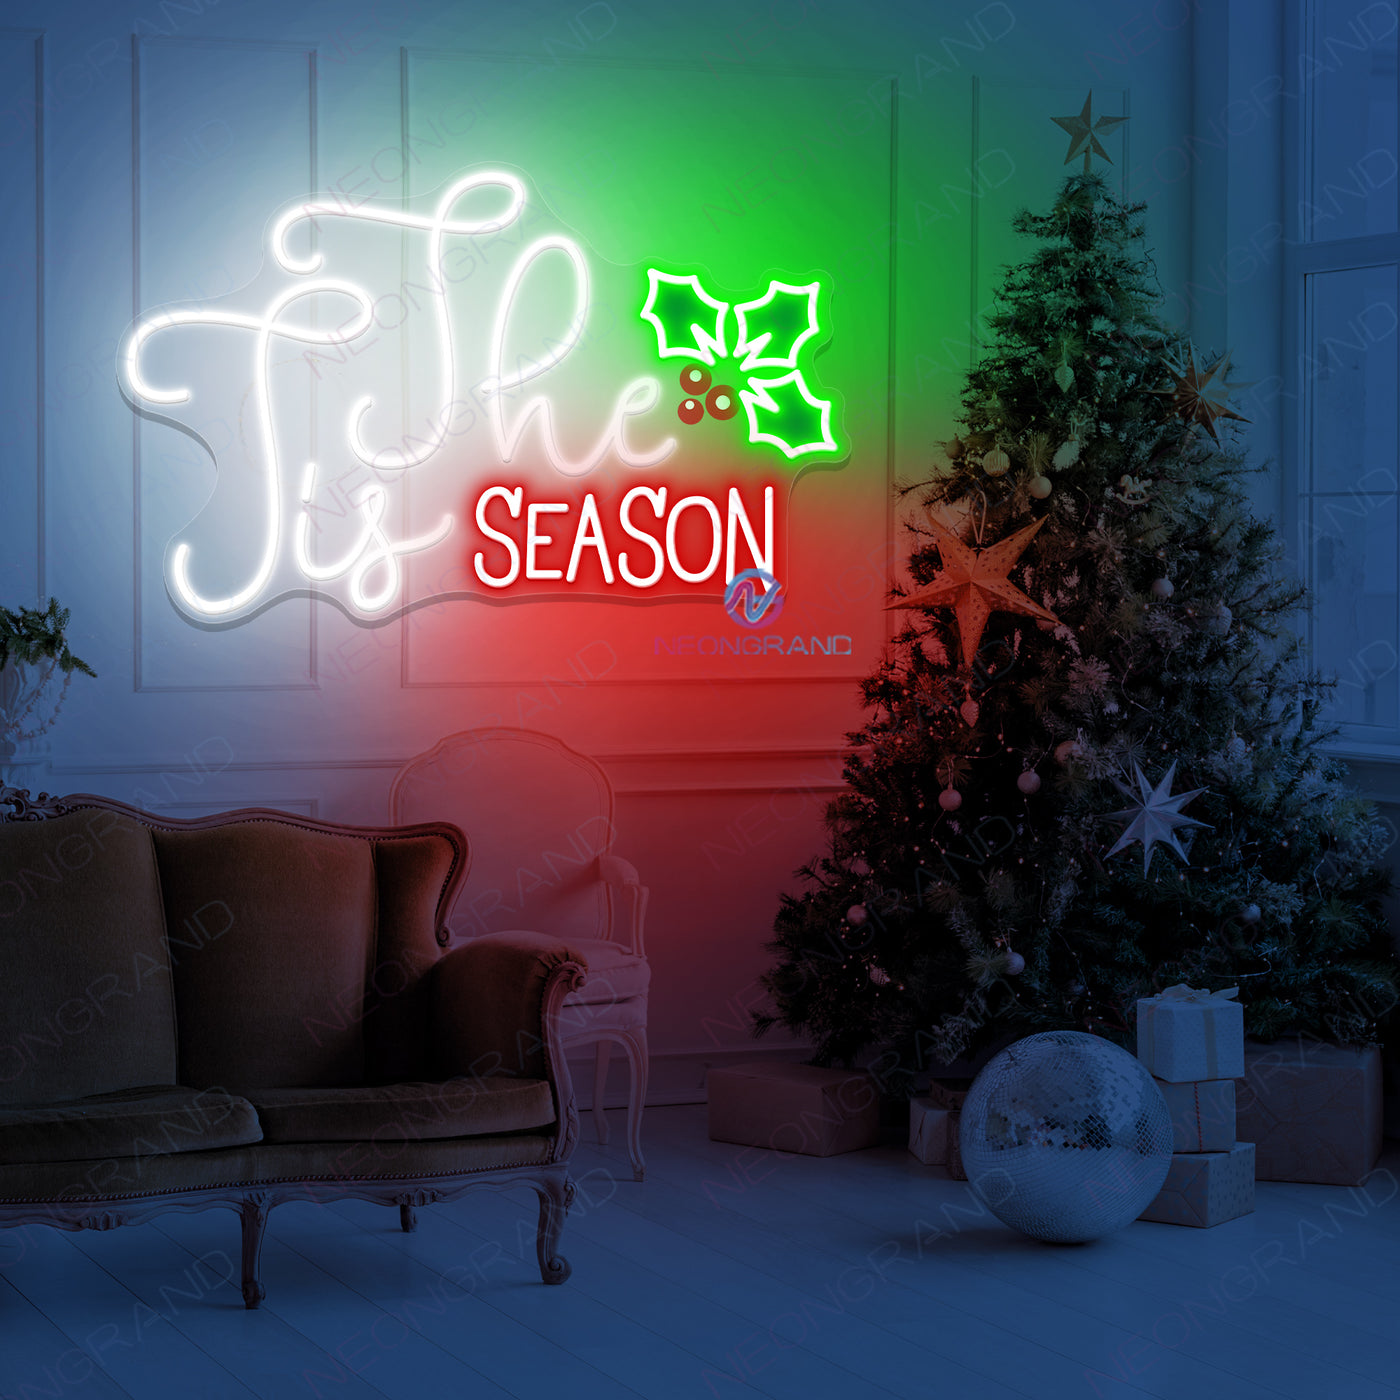 Tis The Season Neon Sign Christmas Led Light